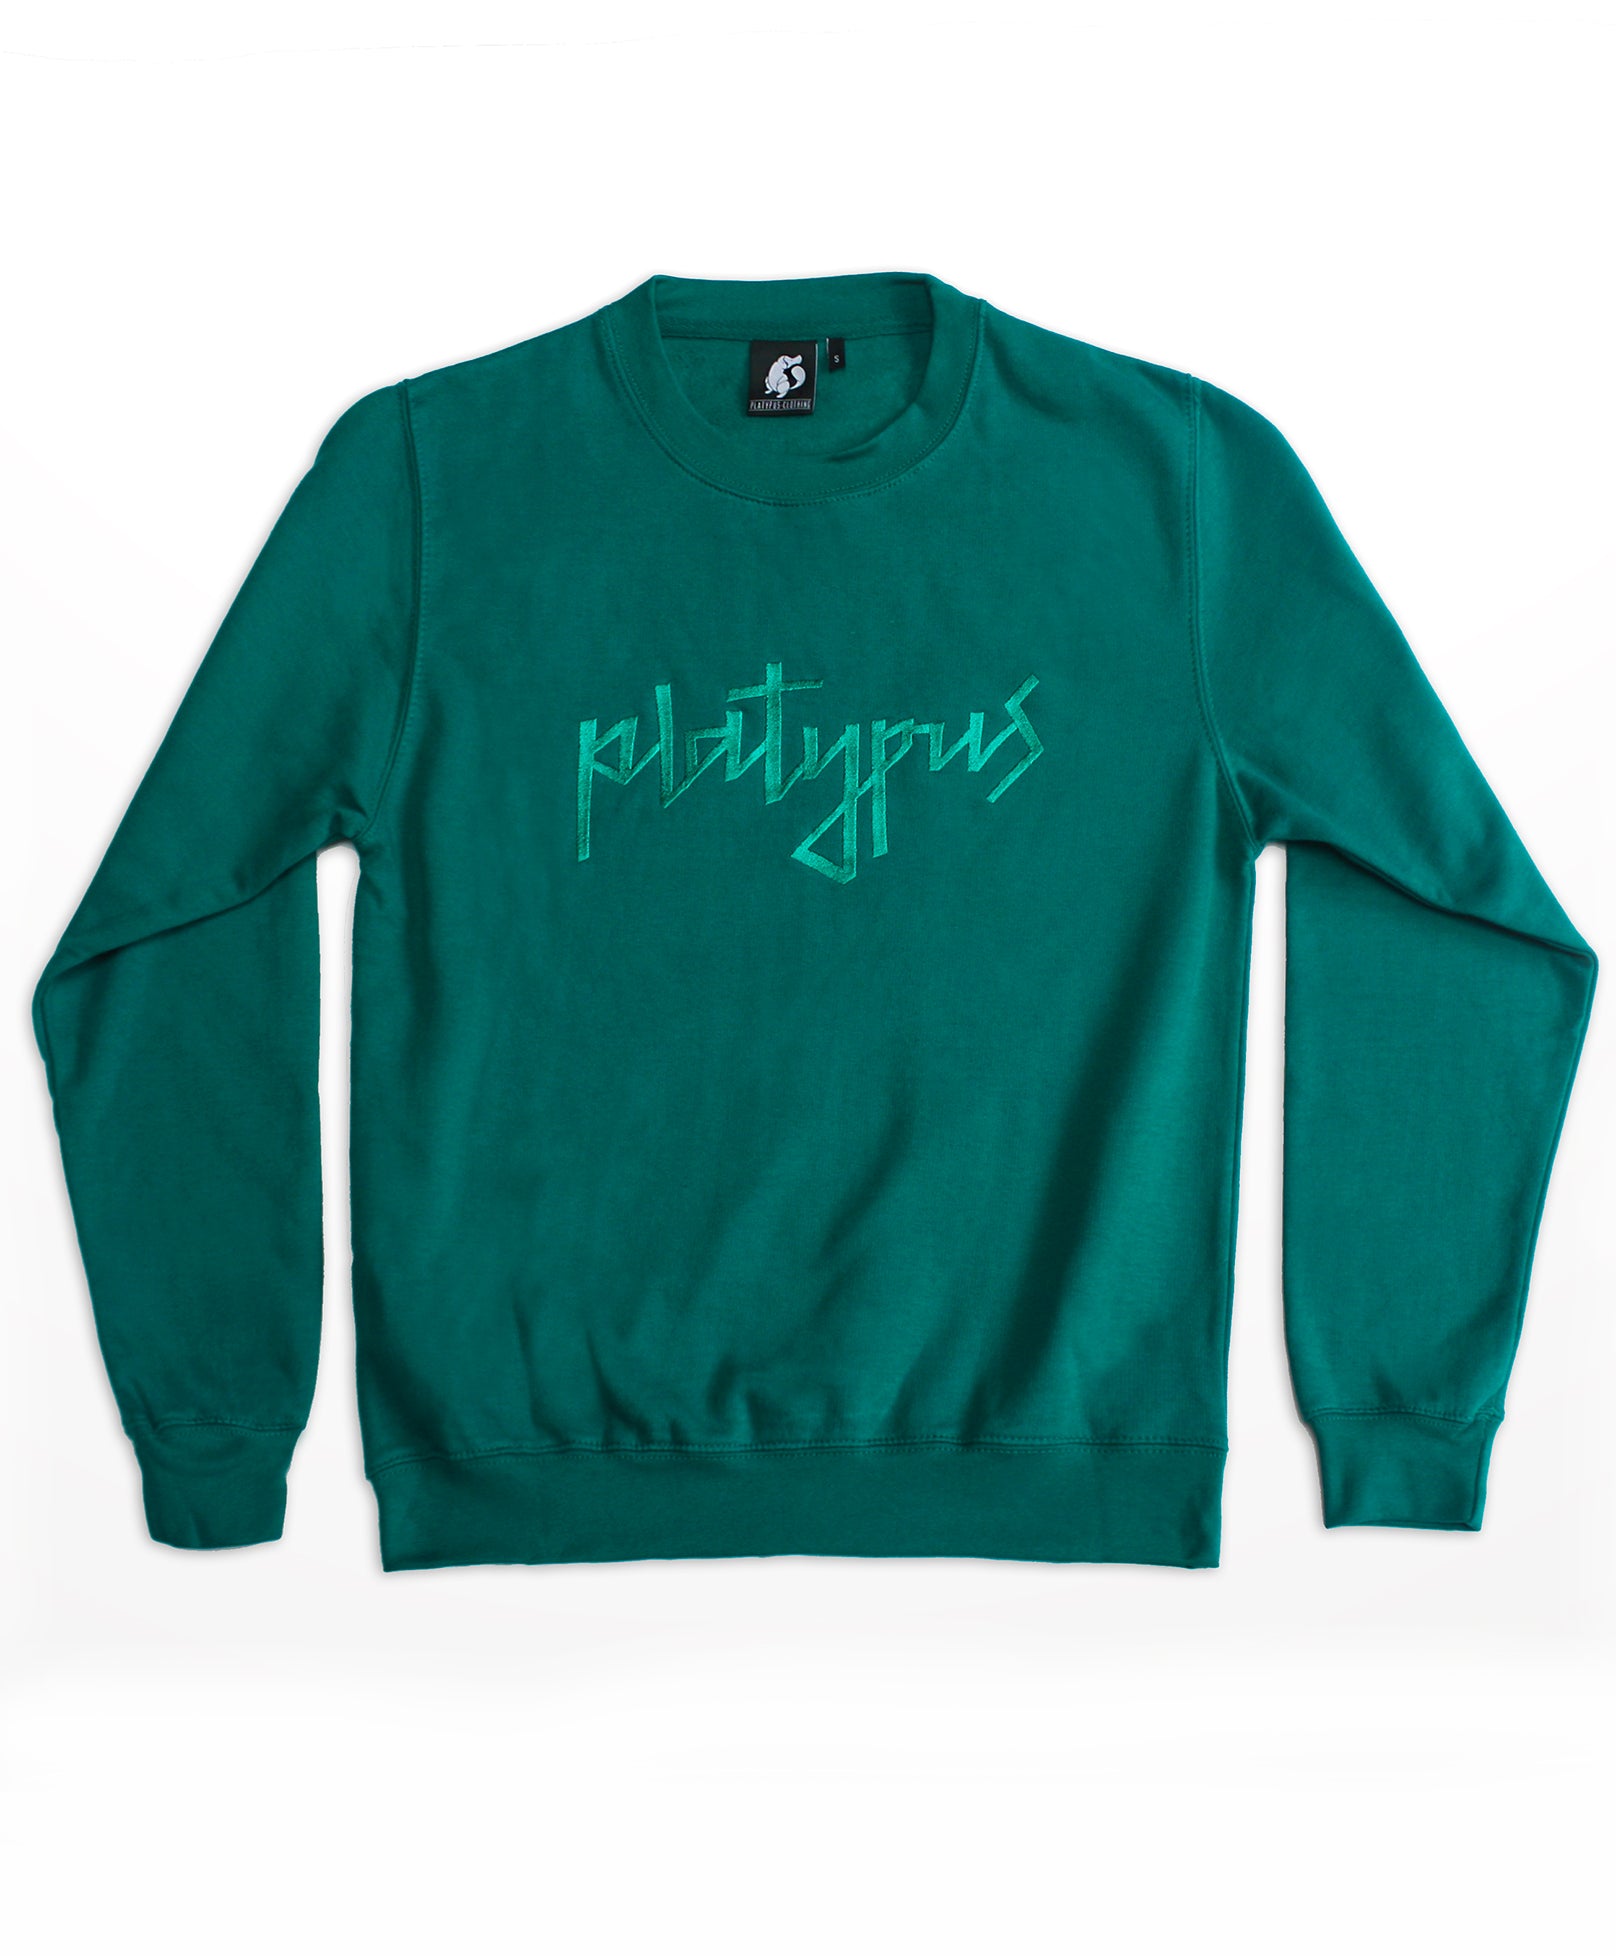 Unisex Teal Crewneck Crewneck Sweatshirt - Best UK Streetwear brand Platypus